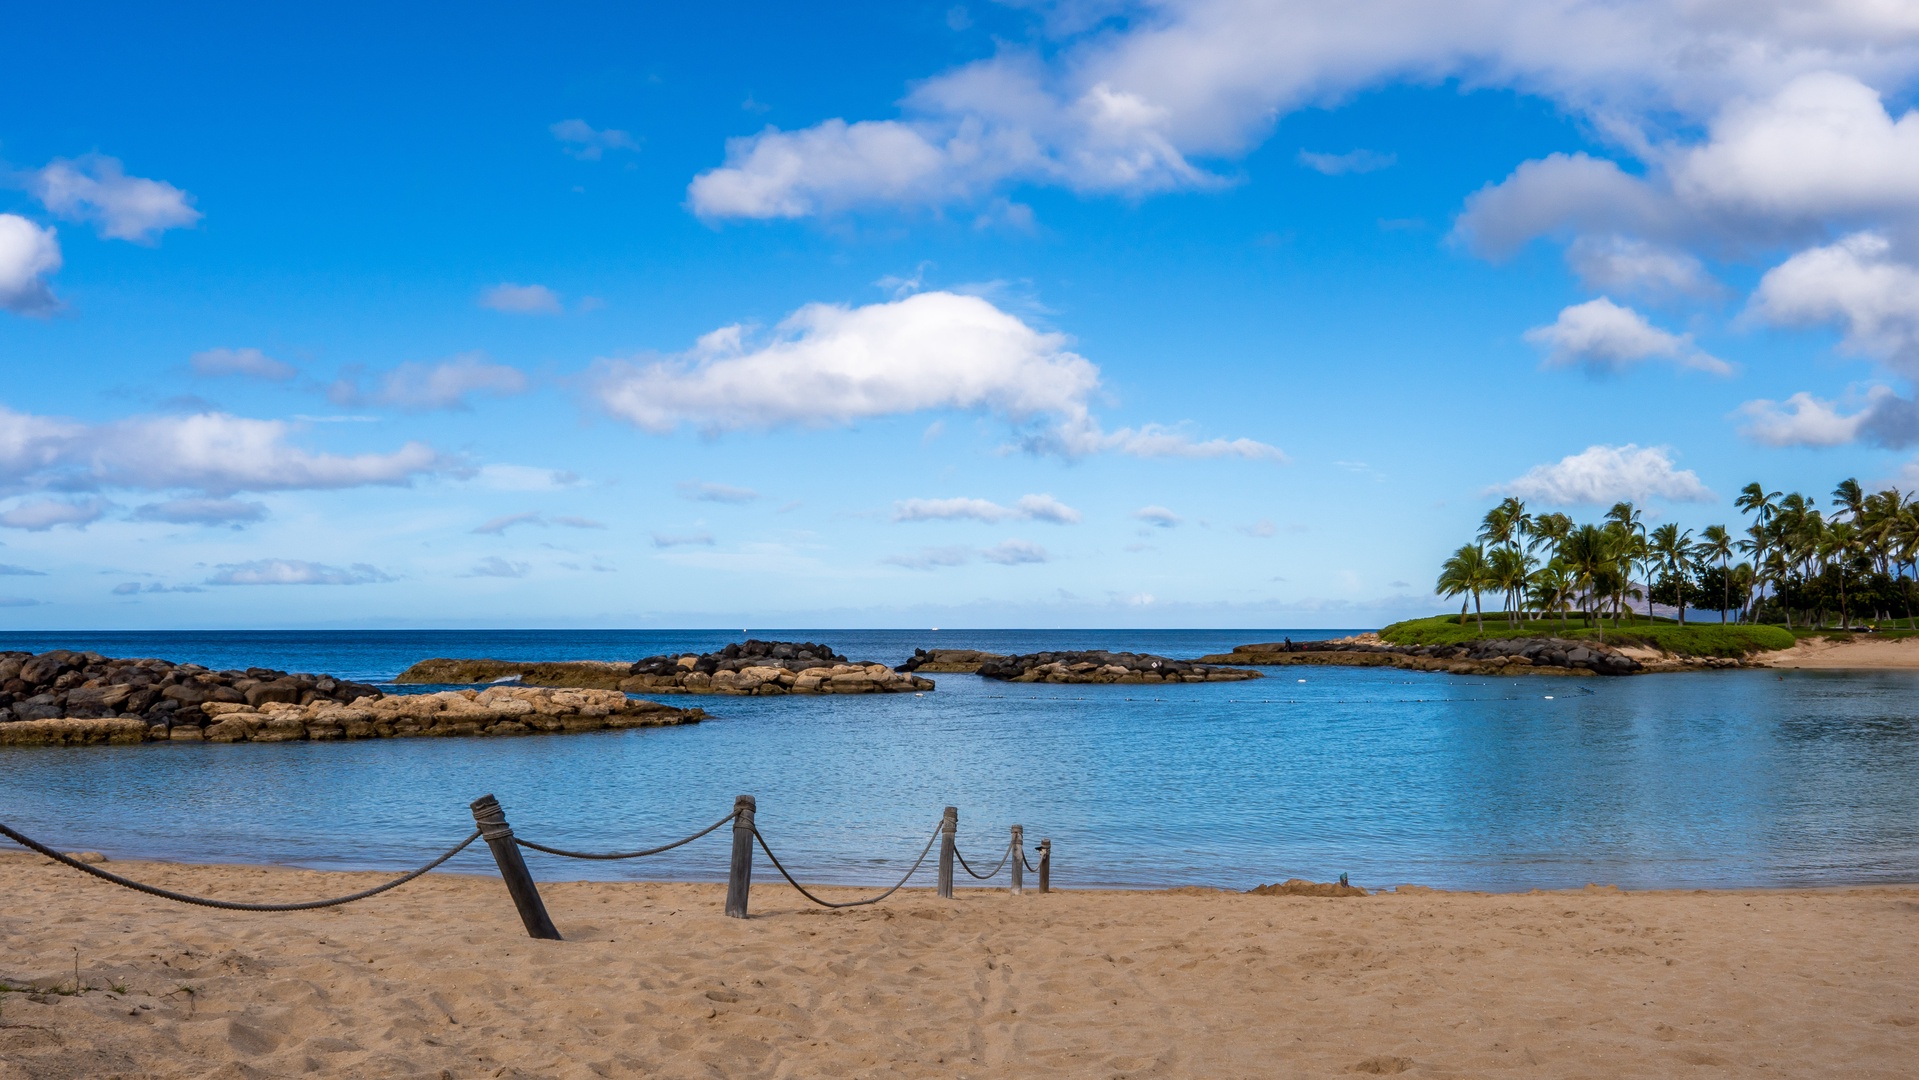 Kapolei Vacation Rentals, Kai Lani 16C - Take a stroll along the peaceful shores in paradise.